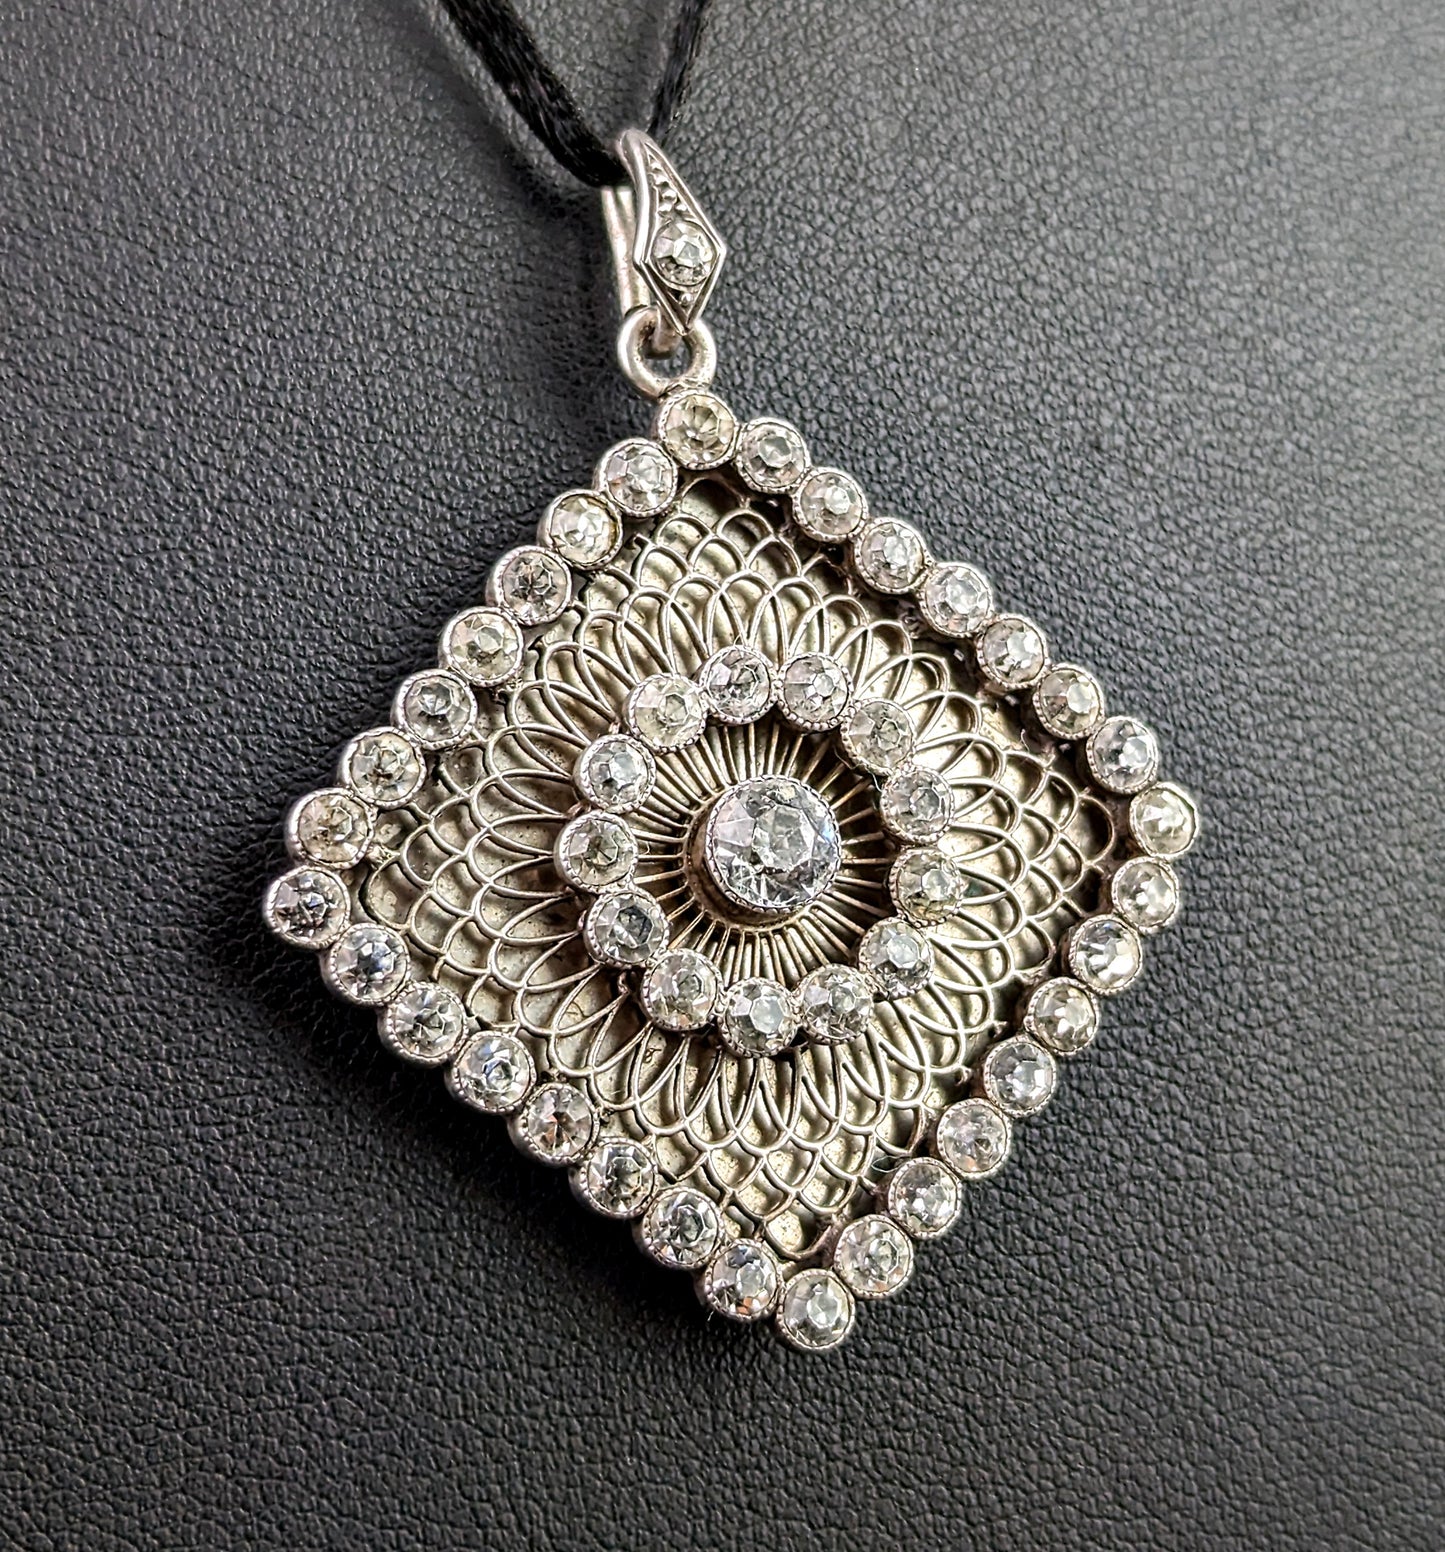 Antique French silver and paste pendant, Diamond shape, Filigree